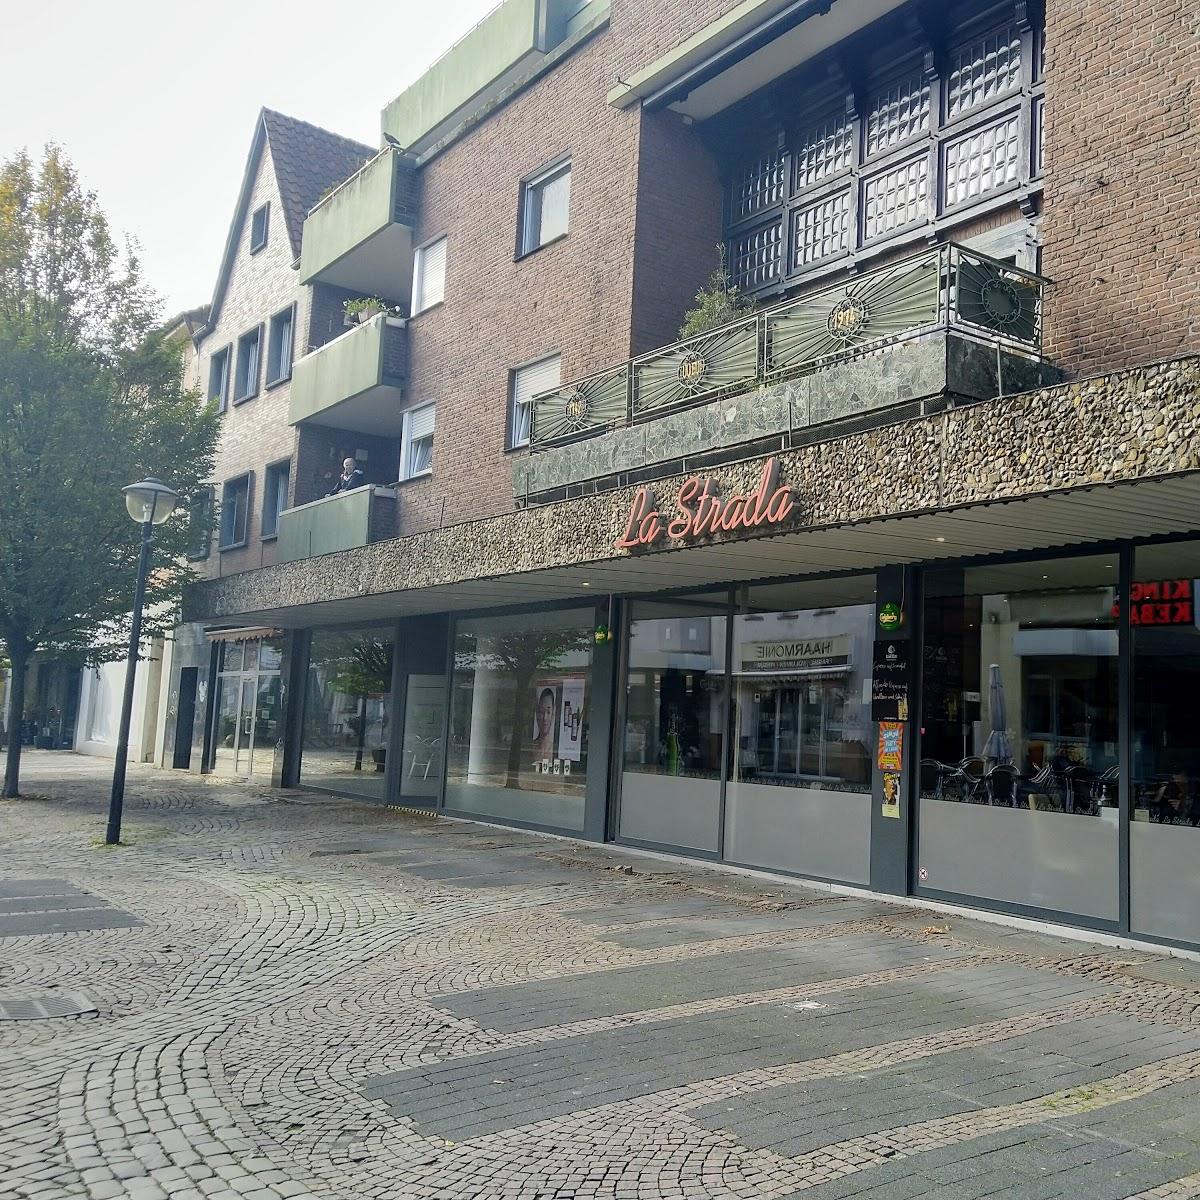 Restaurant "Pizzeria La Strada" in Werne